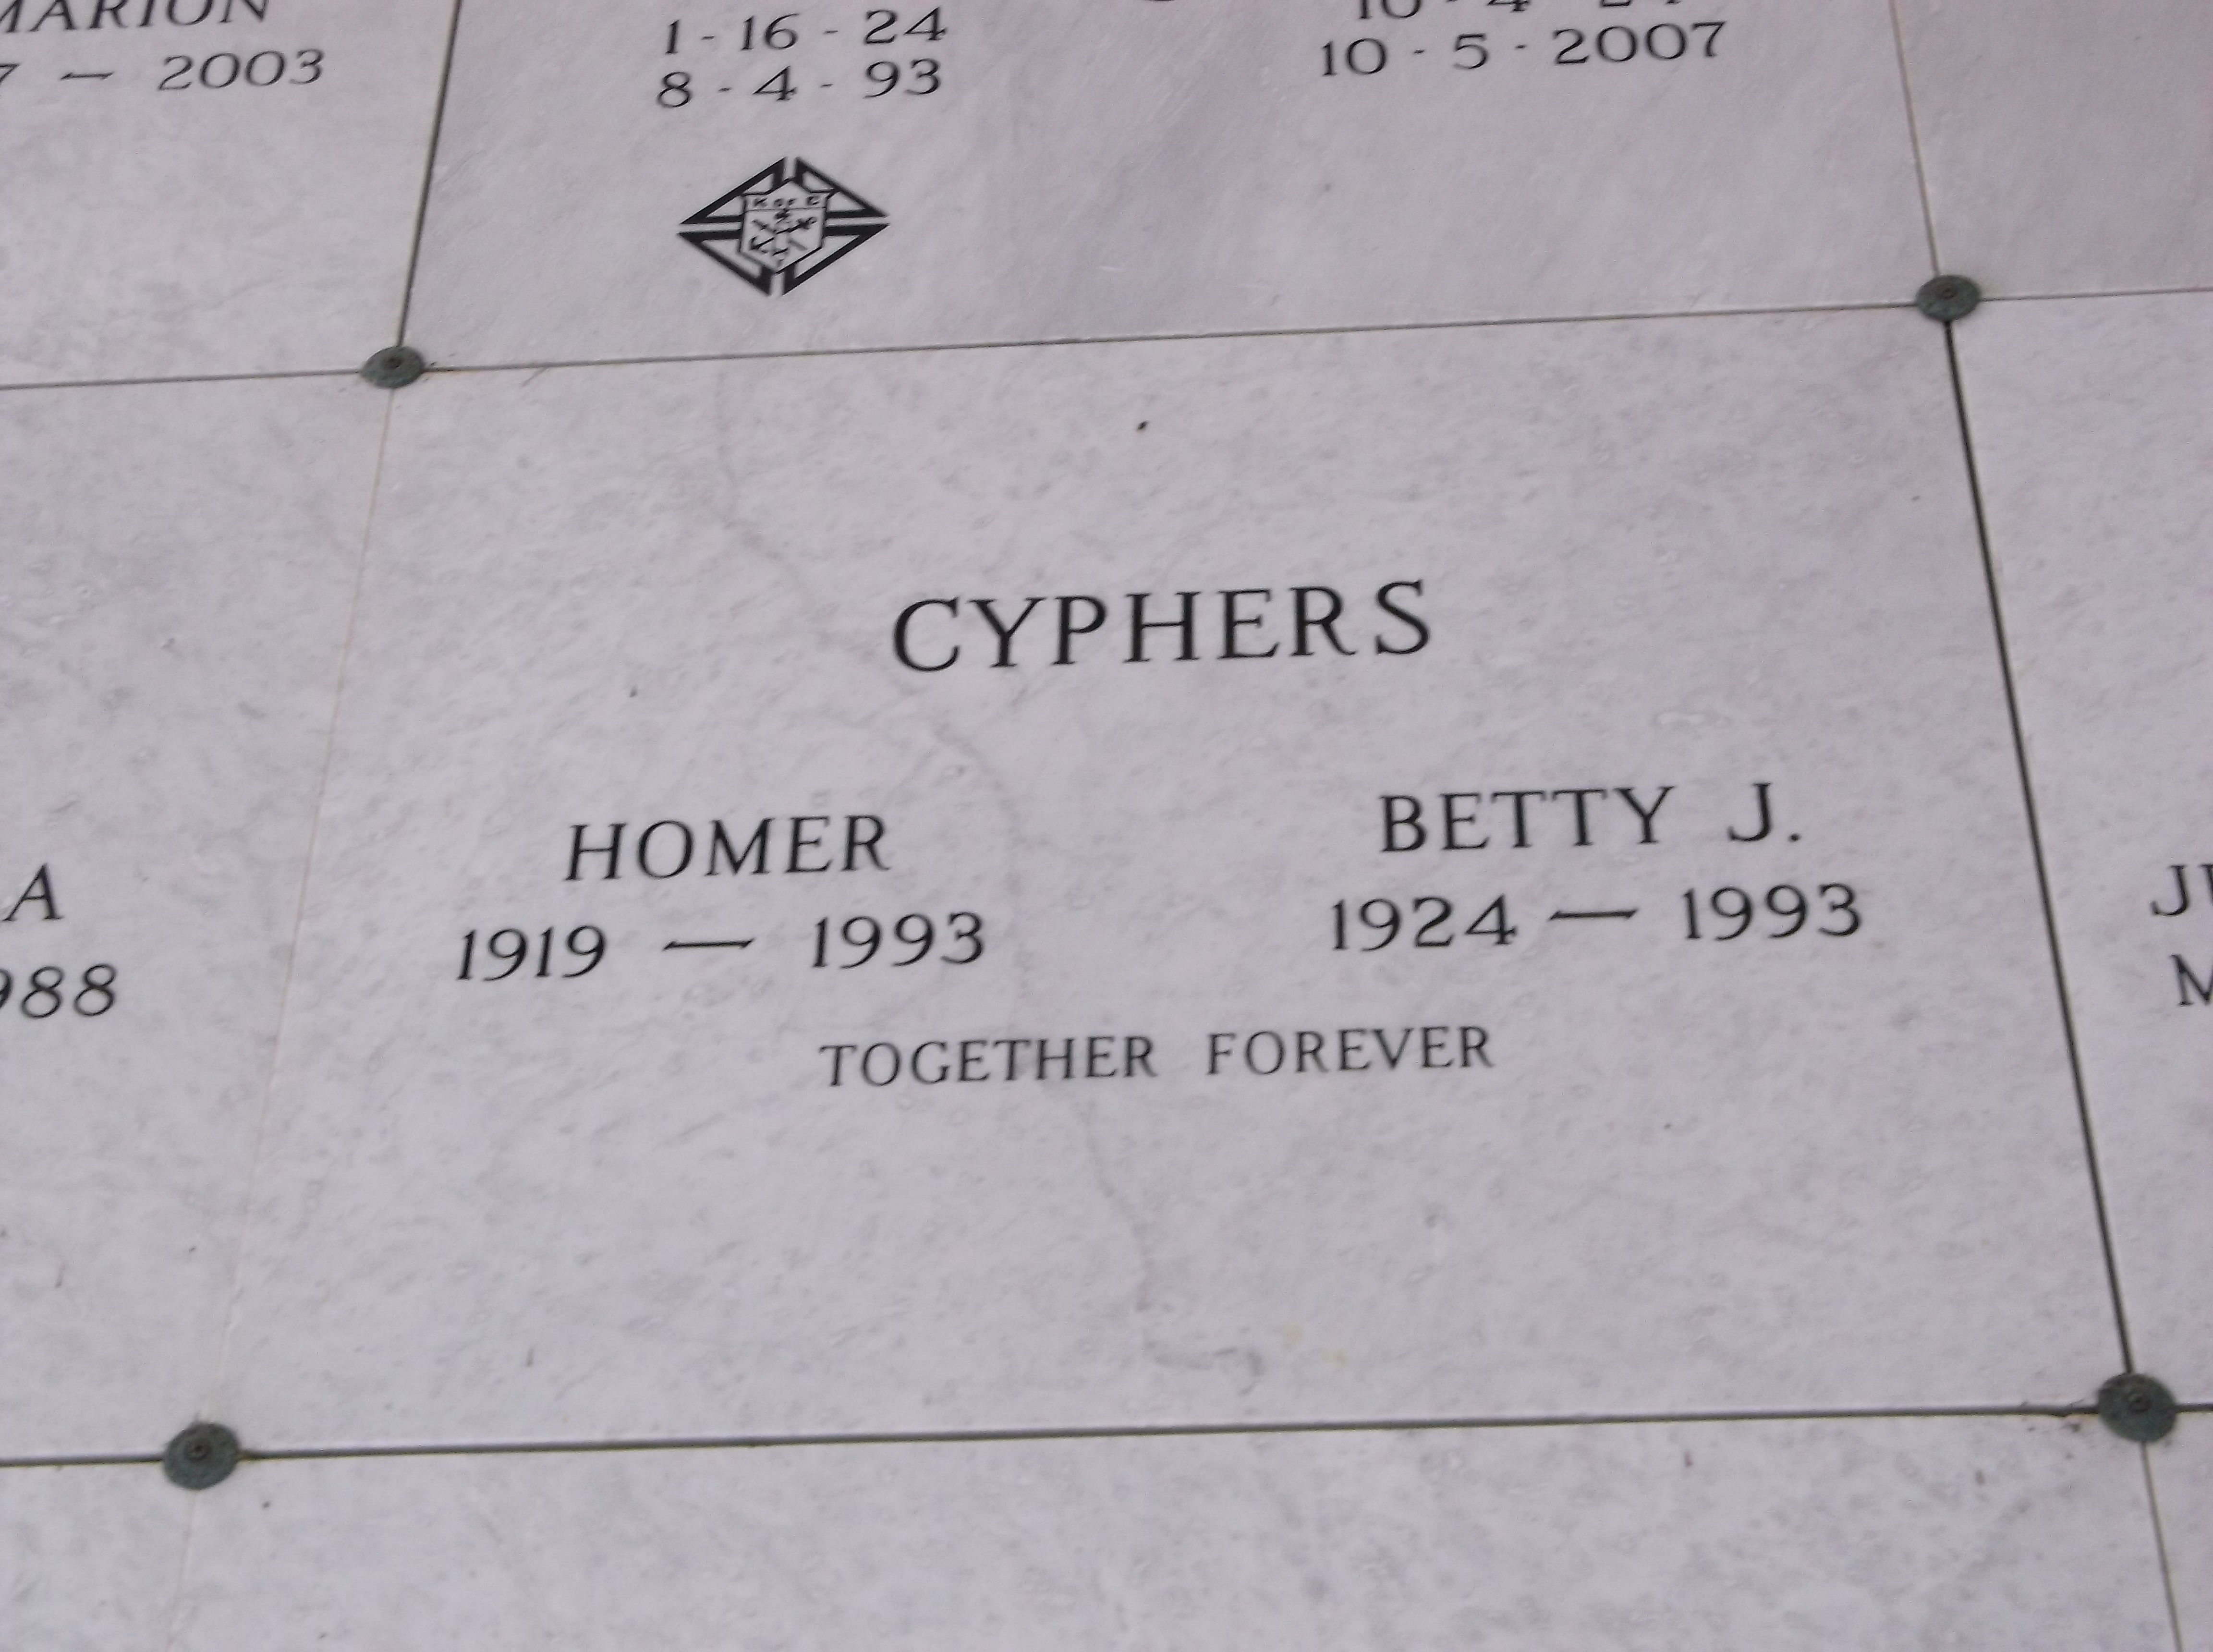 Homer Cyphers